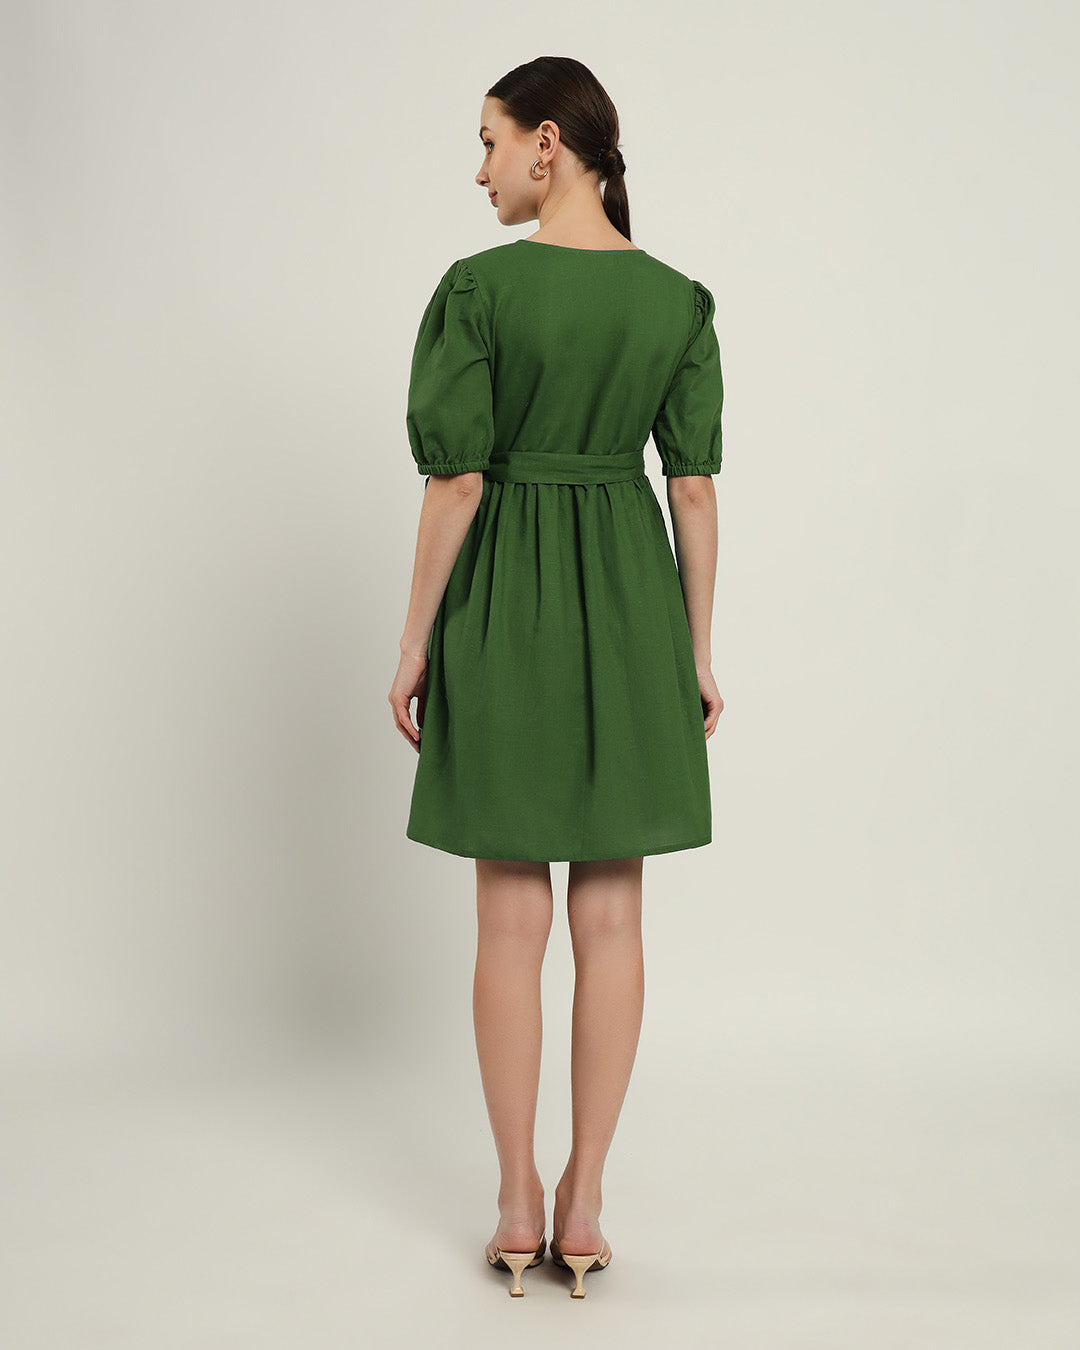 The Inzai Emerald Cotton Dress